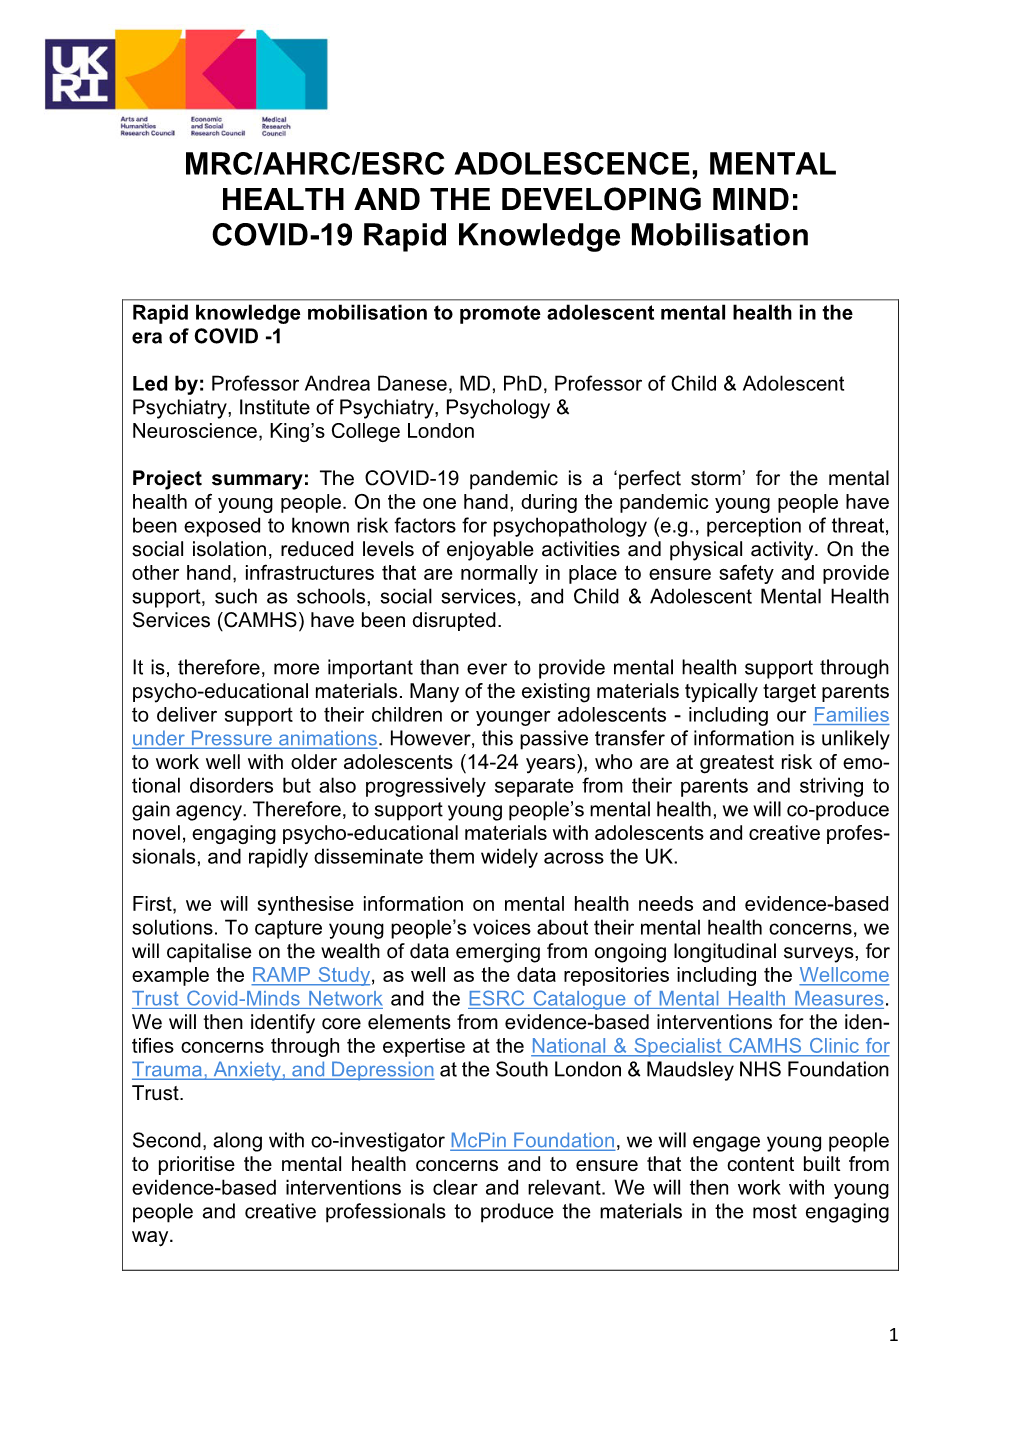 COVID-19 Rapid Knowledge Mobilisation